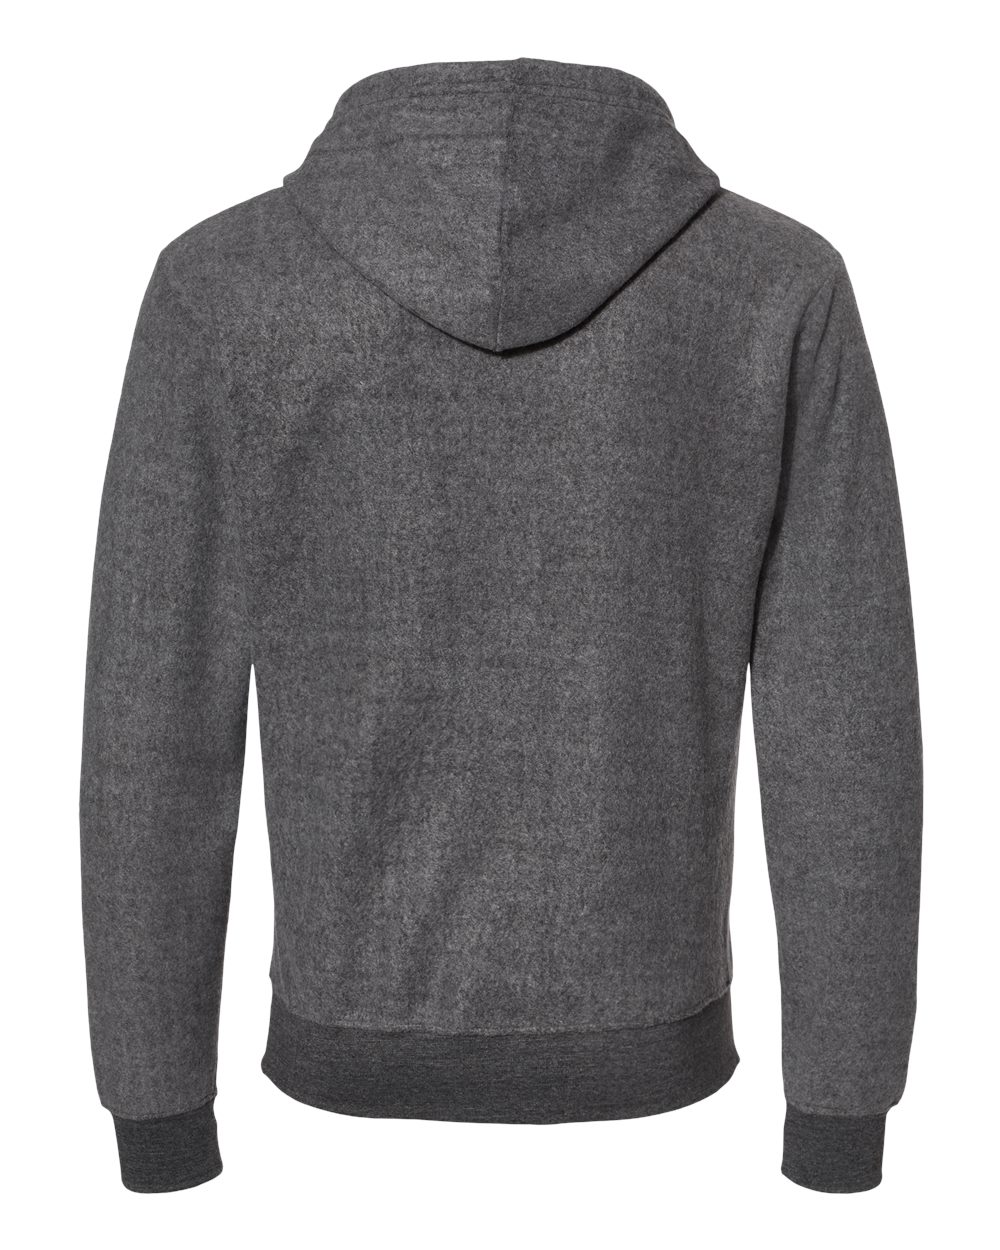 Flip Side Fleece Hooded Pullover - 8709-J. America